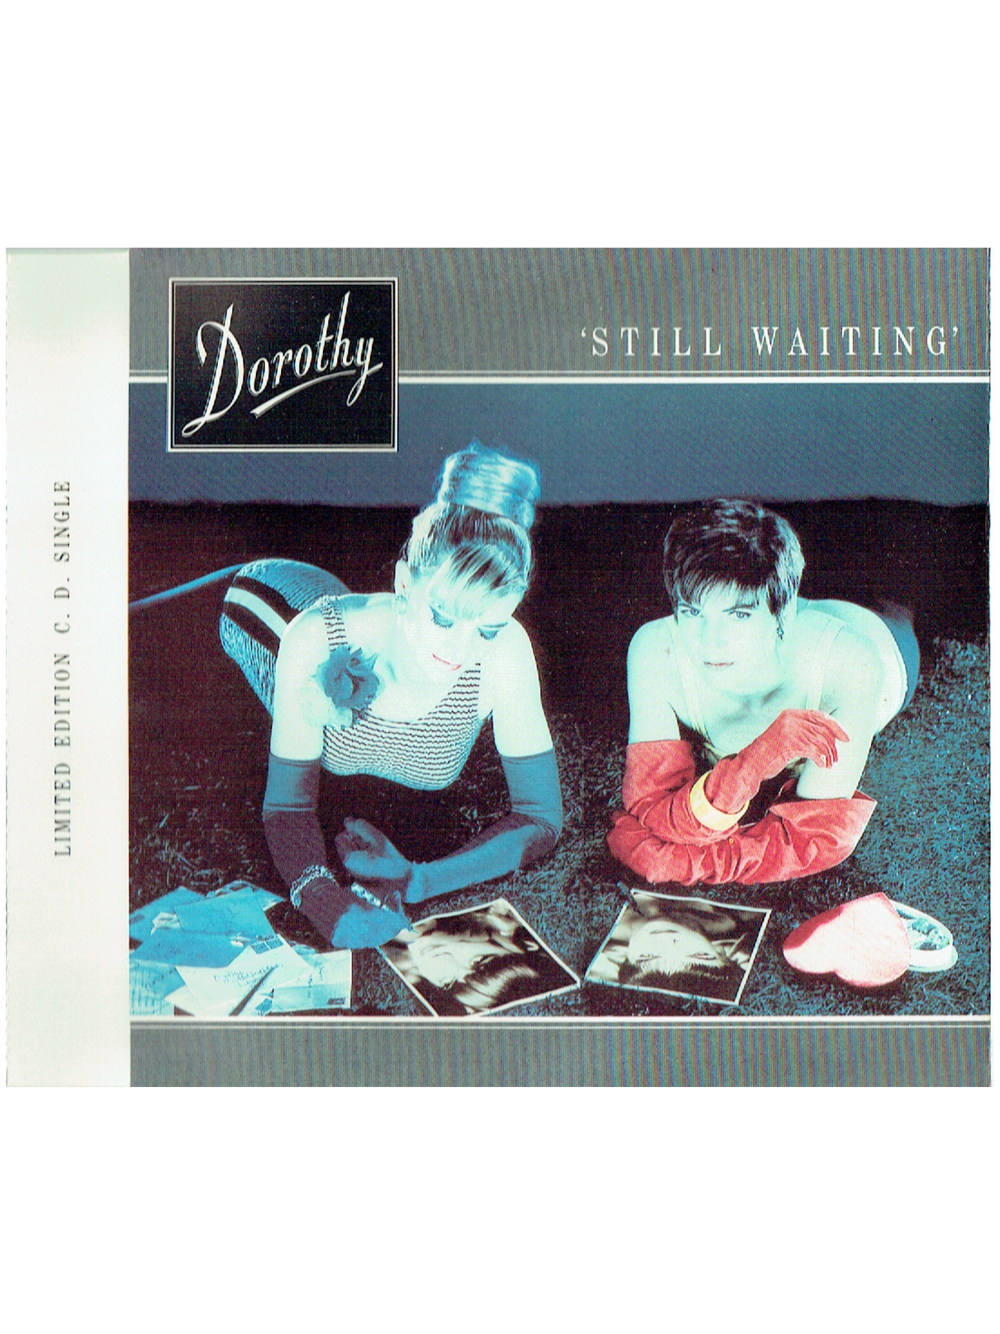 Prince – Dorothy Still Waiting EU / UK CD Single 4 Tracks Written By Prince